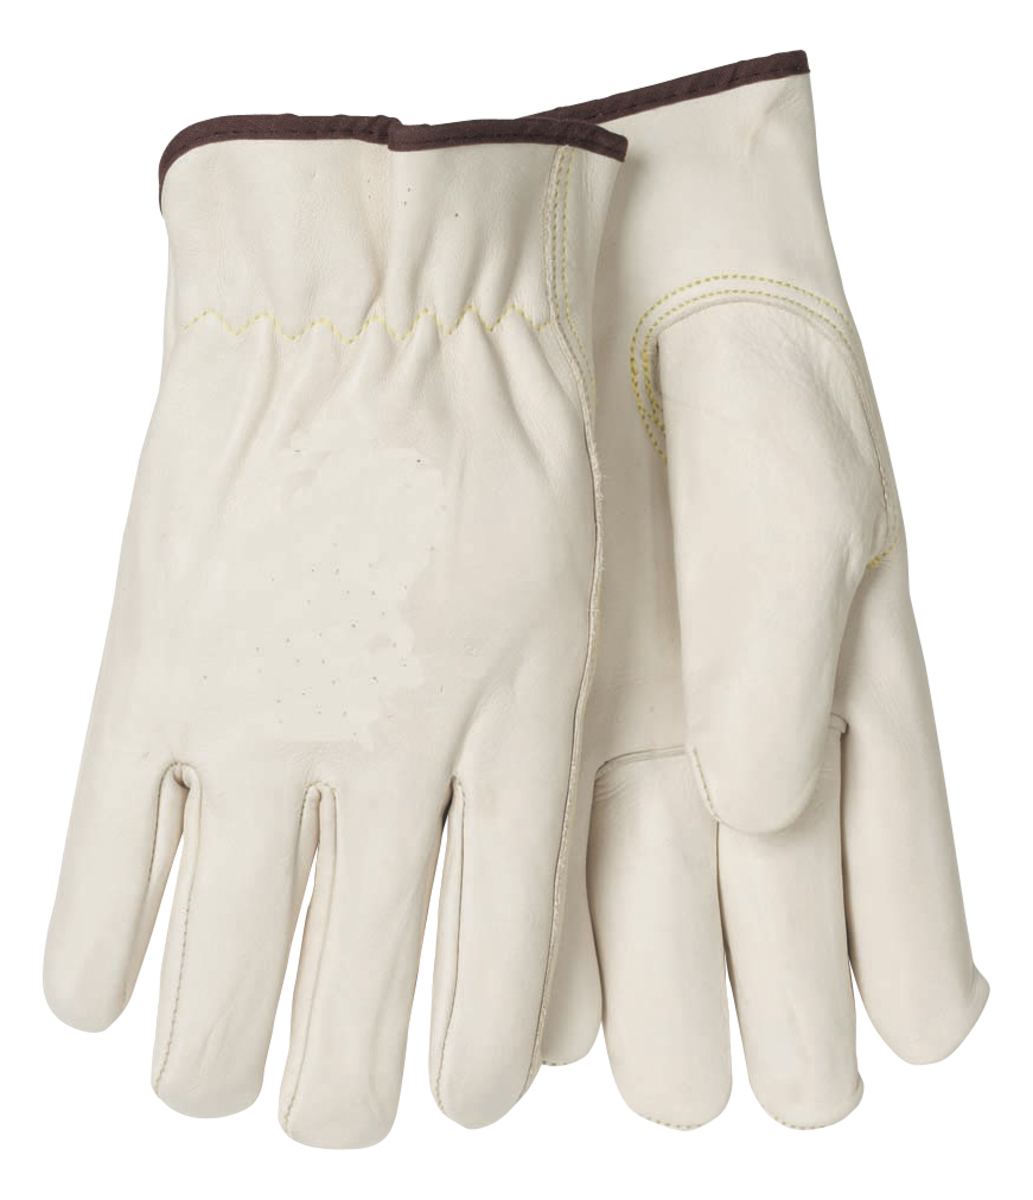 Tillman® X-Large Pearl Standard Top Grain Cowhide Unlined Drivers Gloves